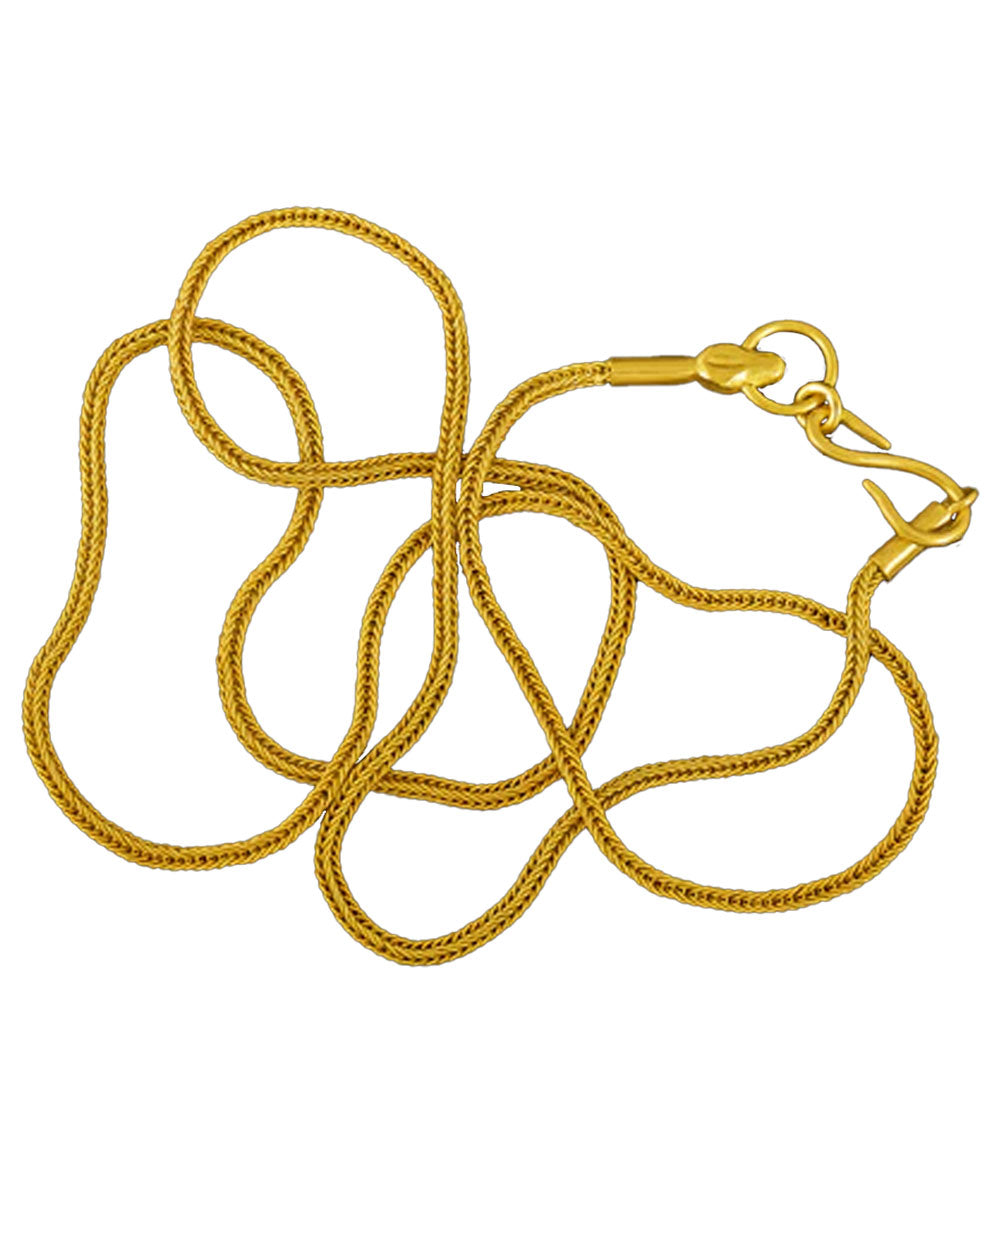 Midgard Serpent Chain Necklace